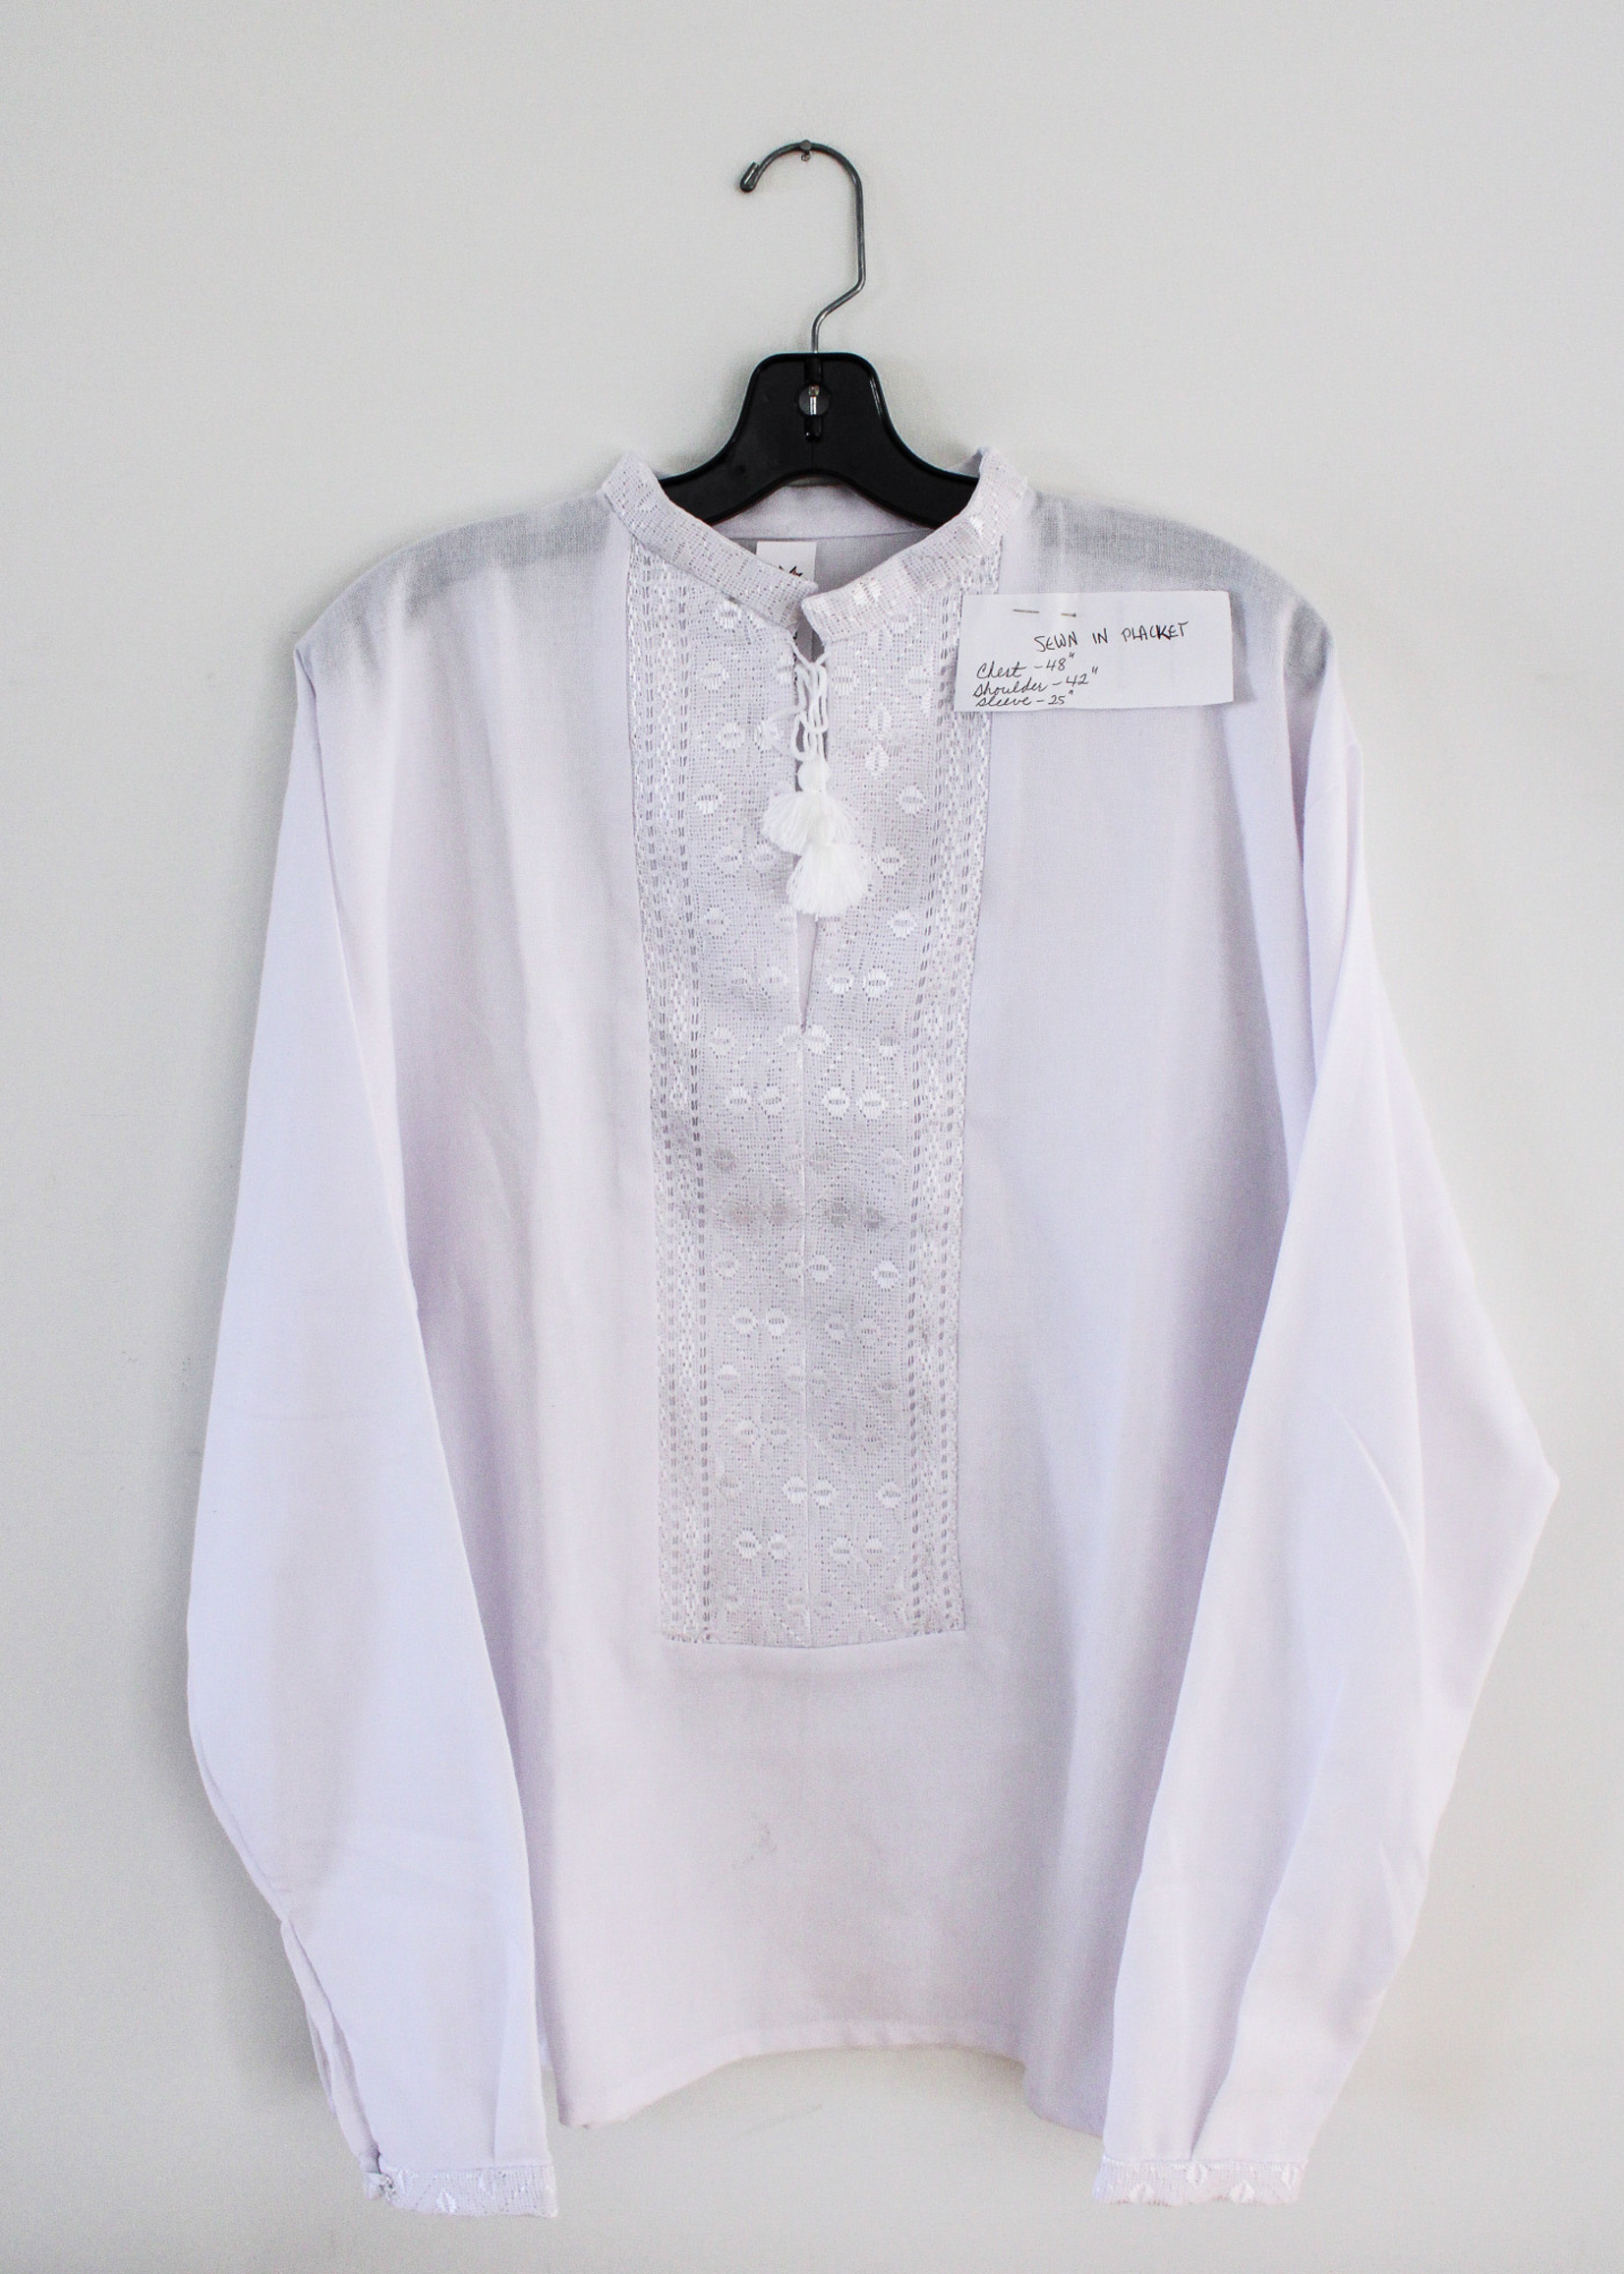 APPAREL - (M) Vyshyvanka White /White  Silk Embroidery /Sewn in Placket